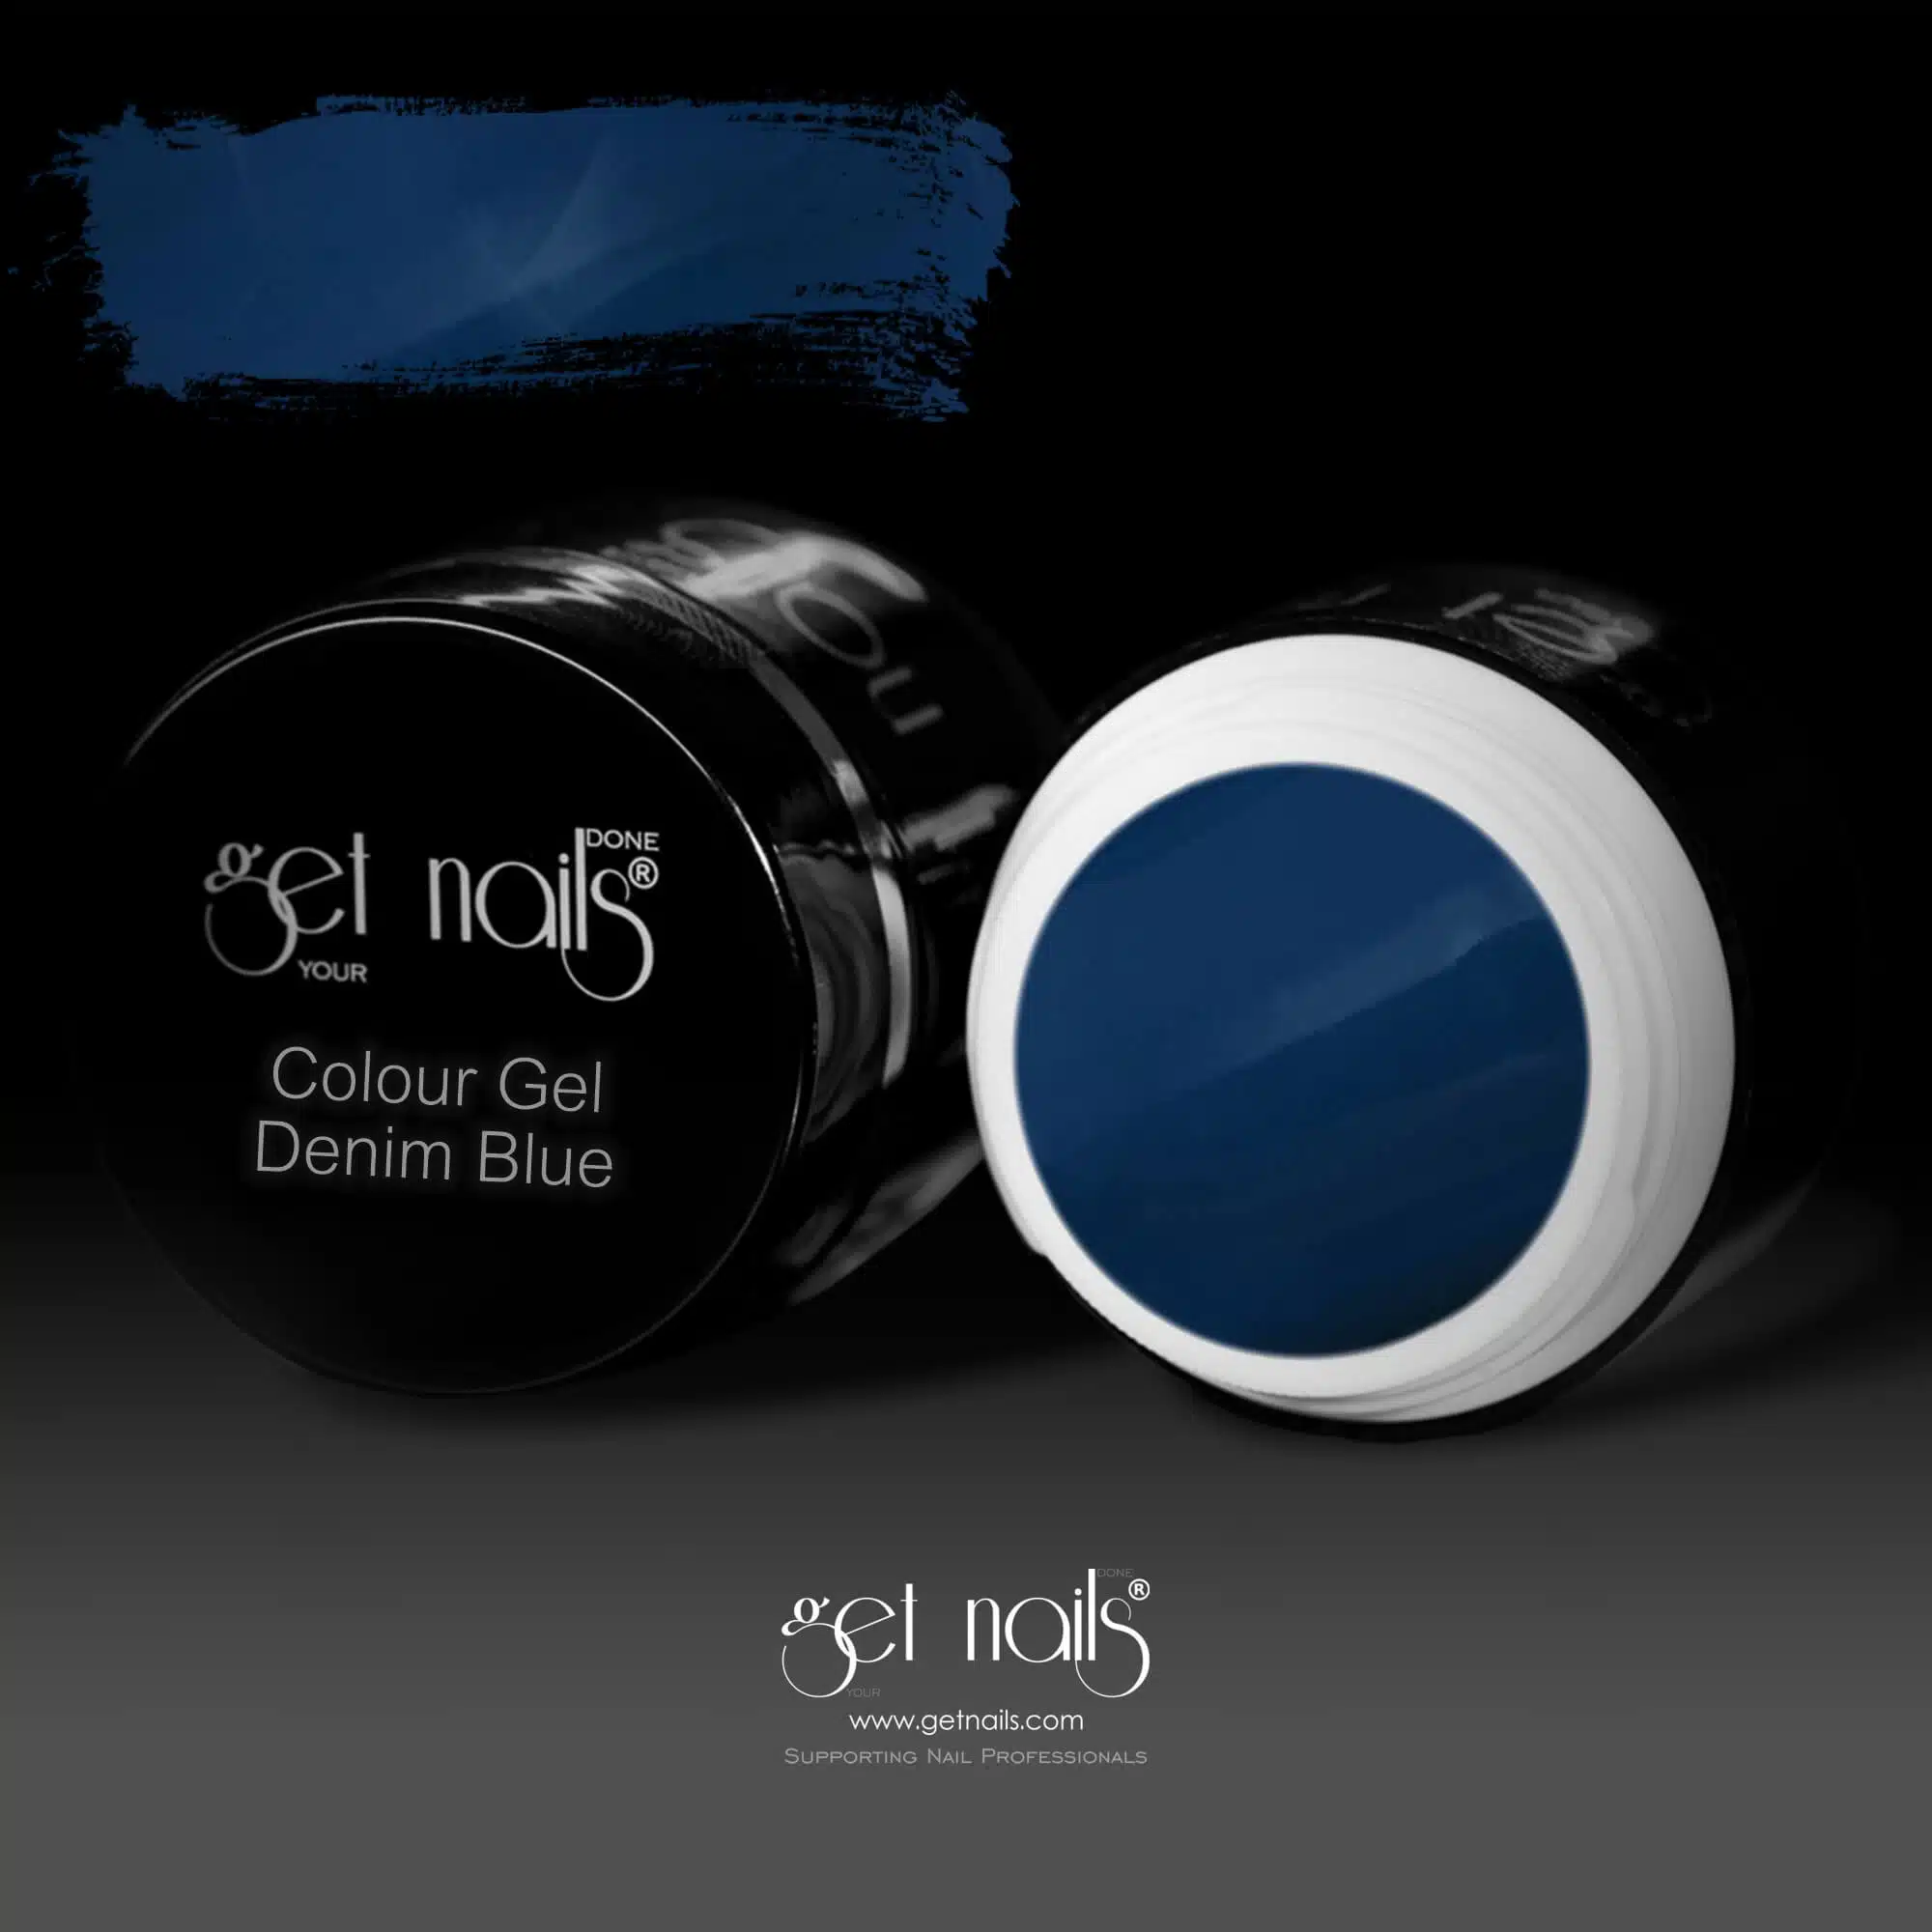 Get Nails Austria - Colour Gel Denim Blue 5g